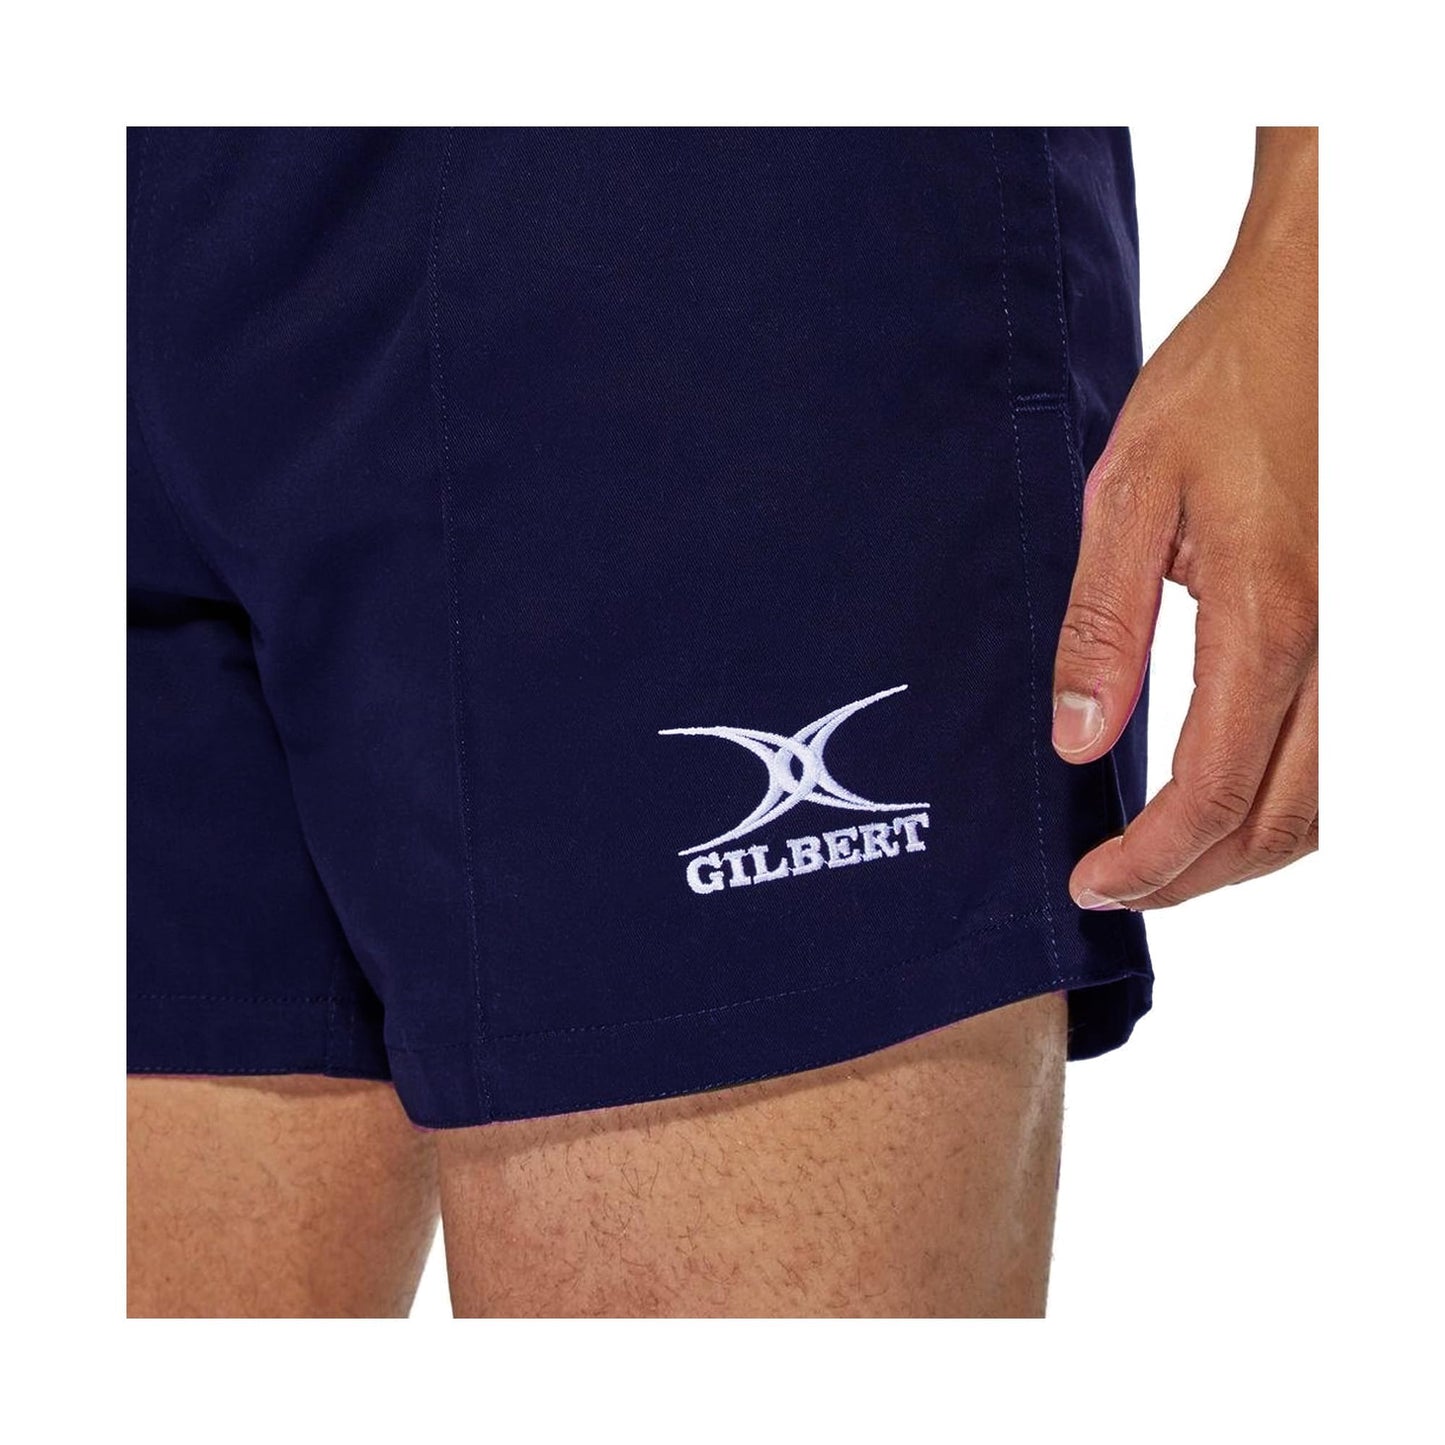 Gilbert Kiwi Pro Rugby Short